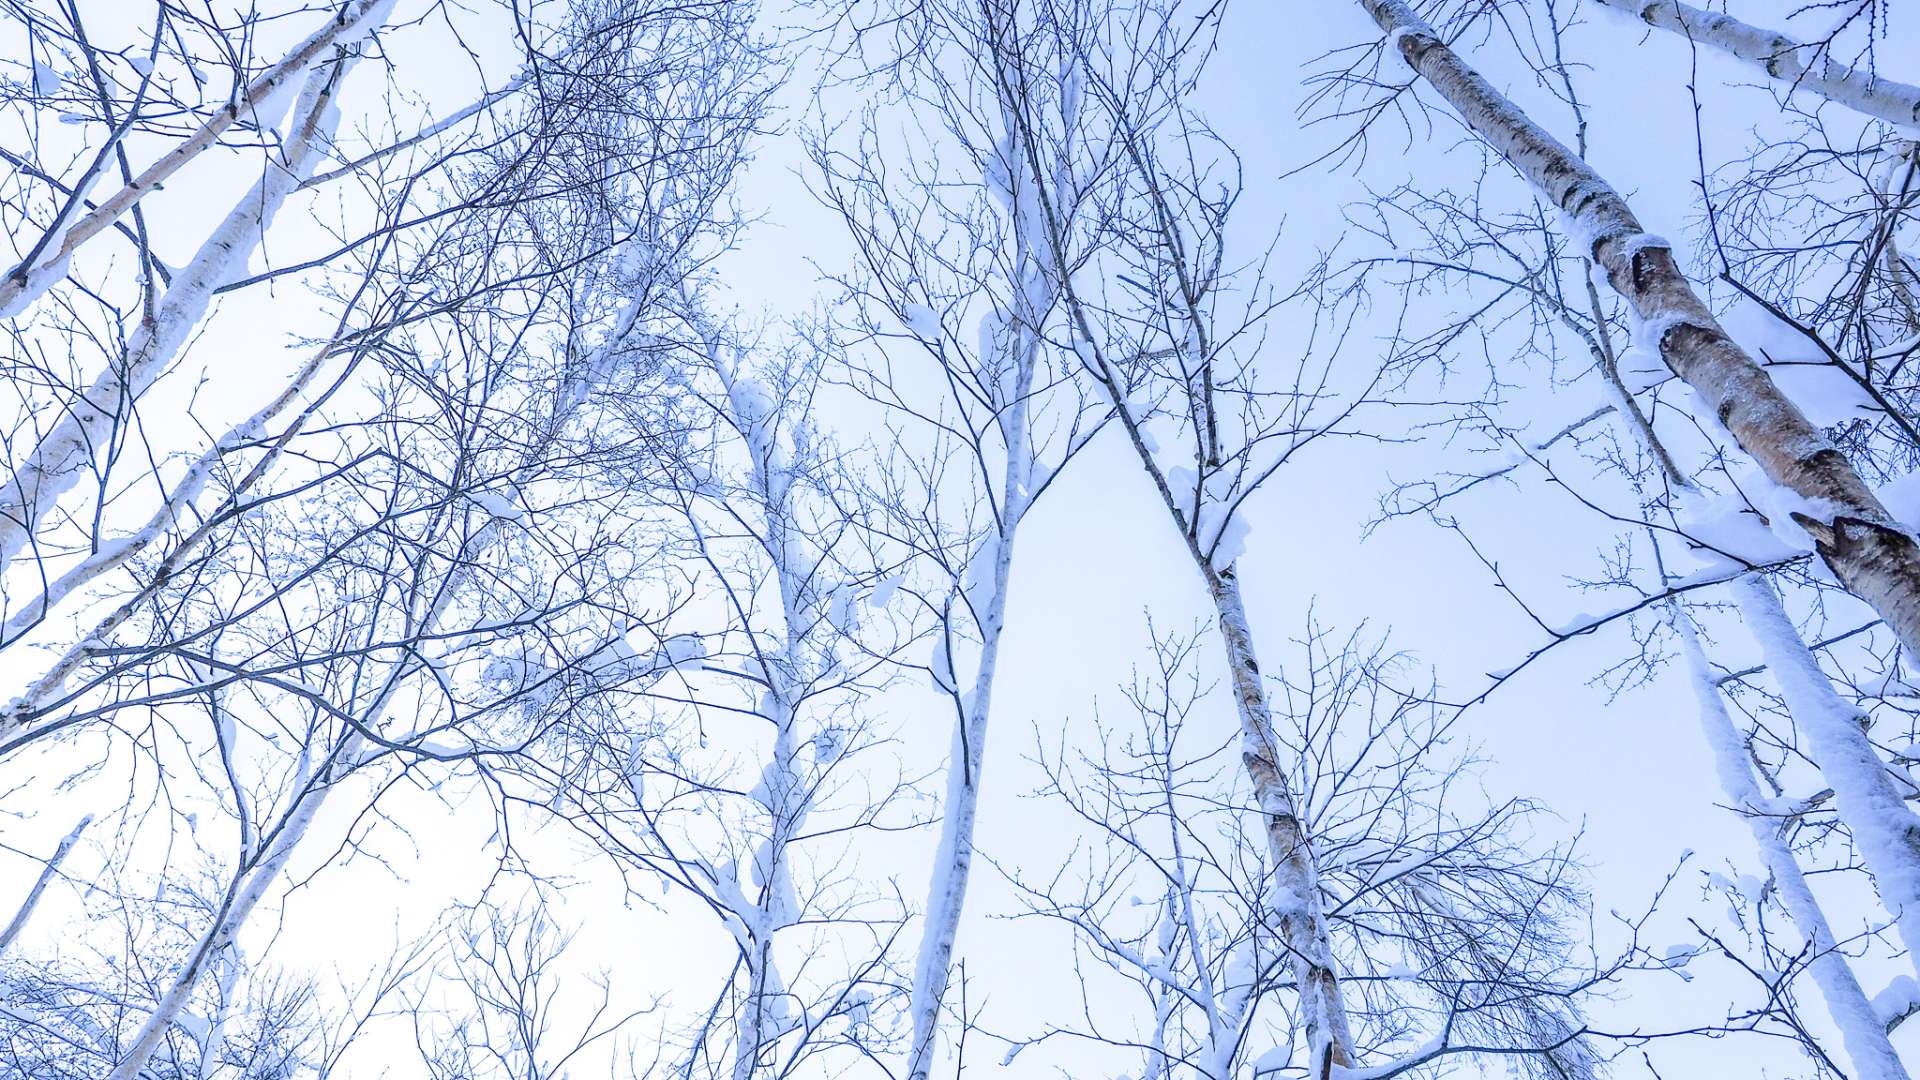 White birches with snow